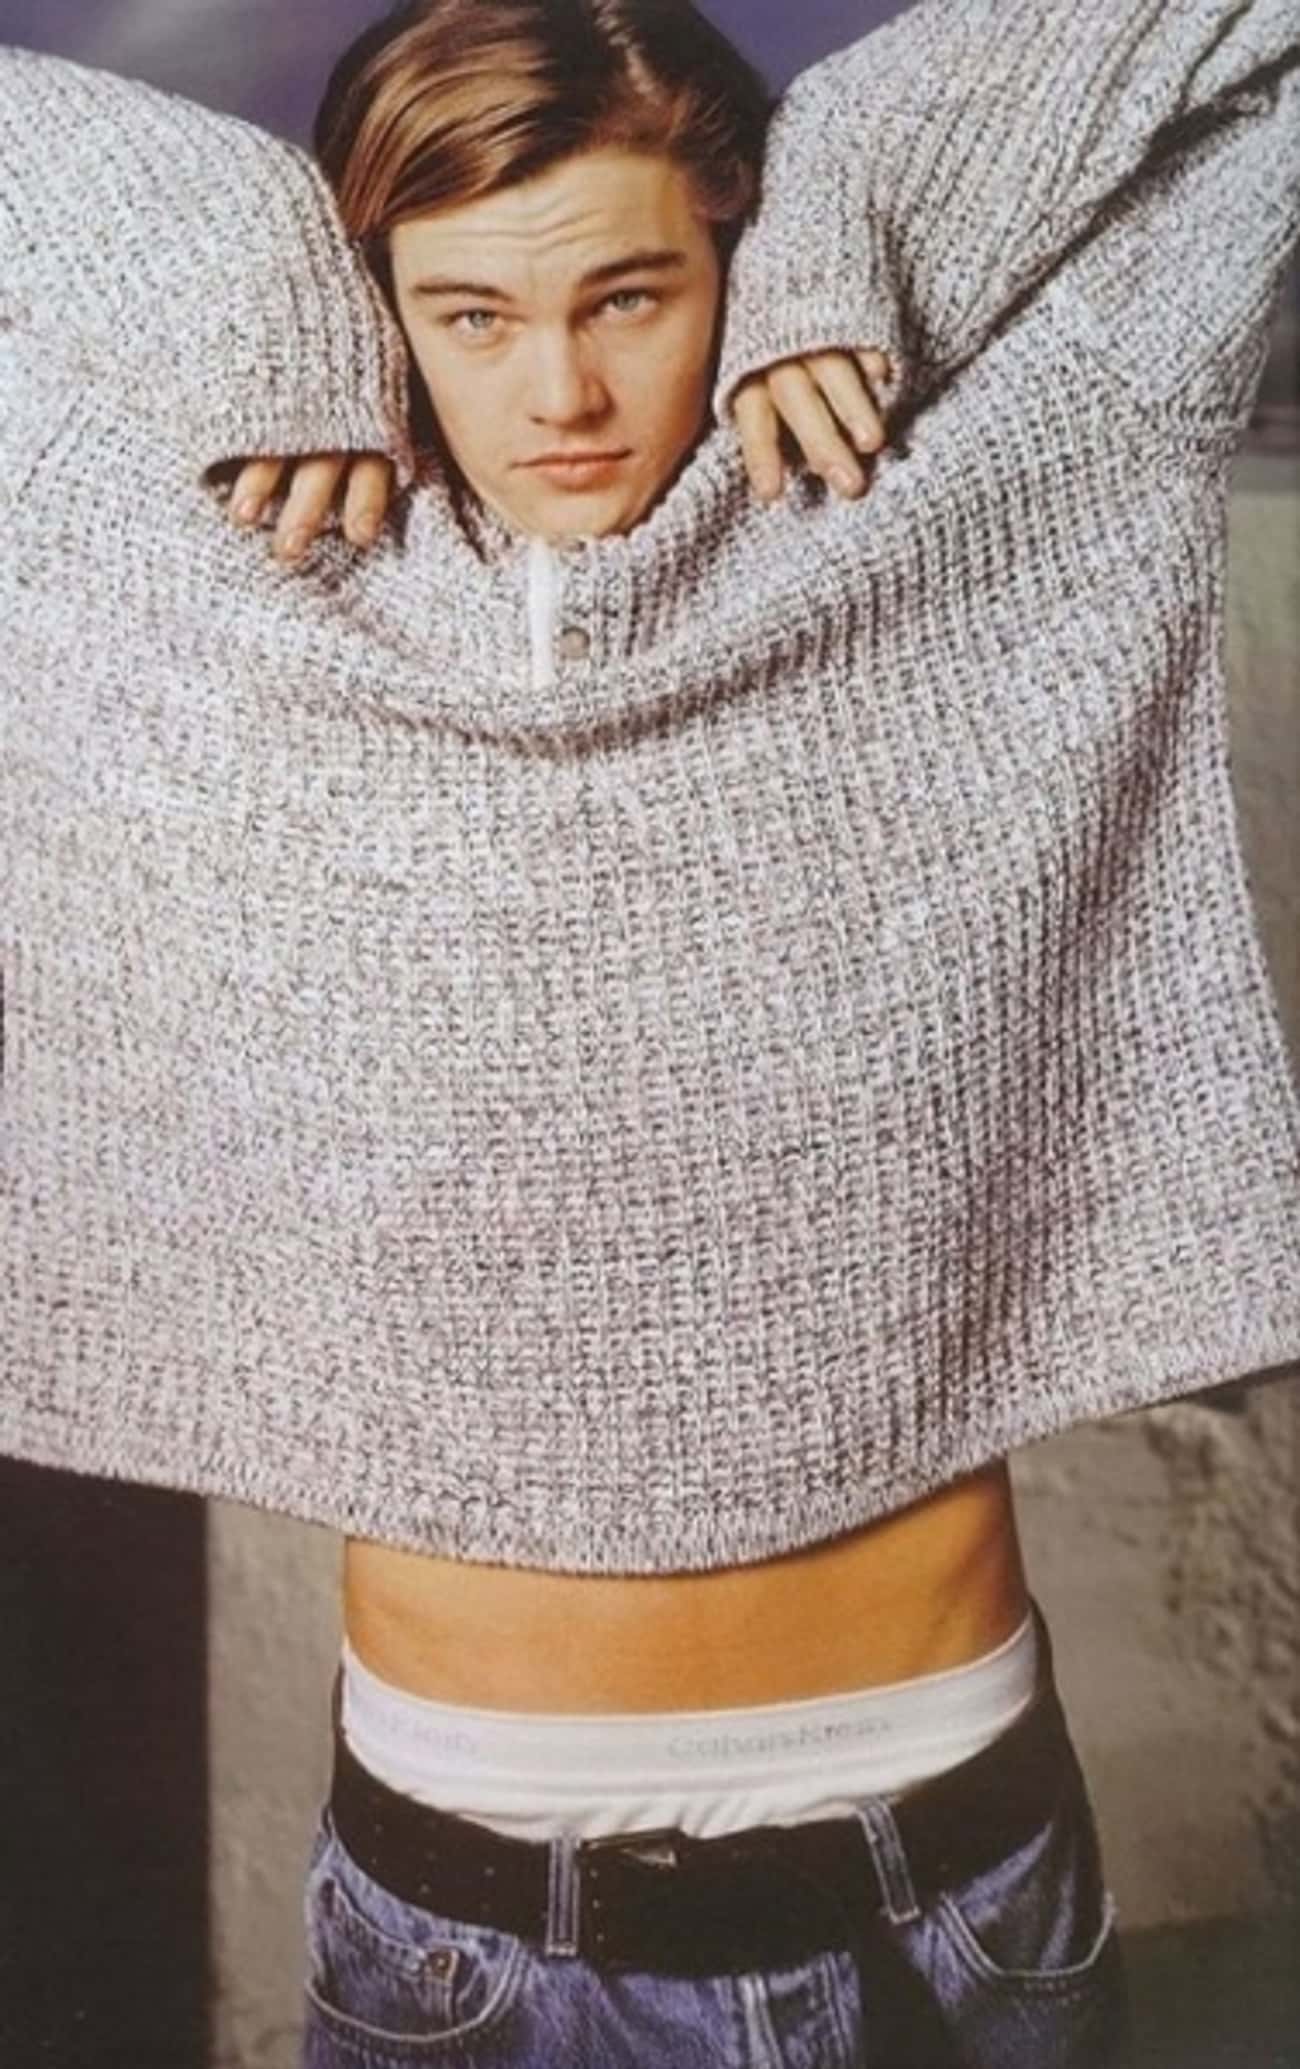 Young Leonardo DiCaprio In A Big Sweater